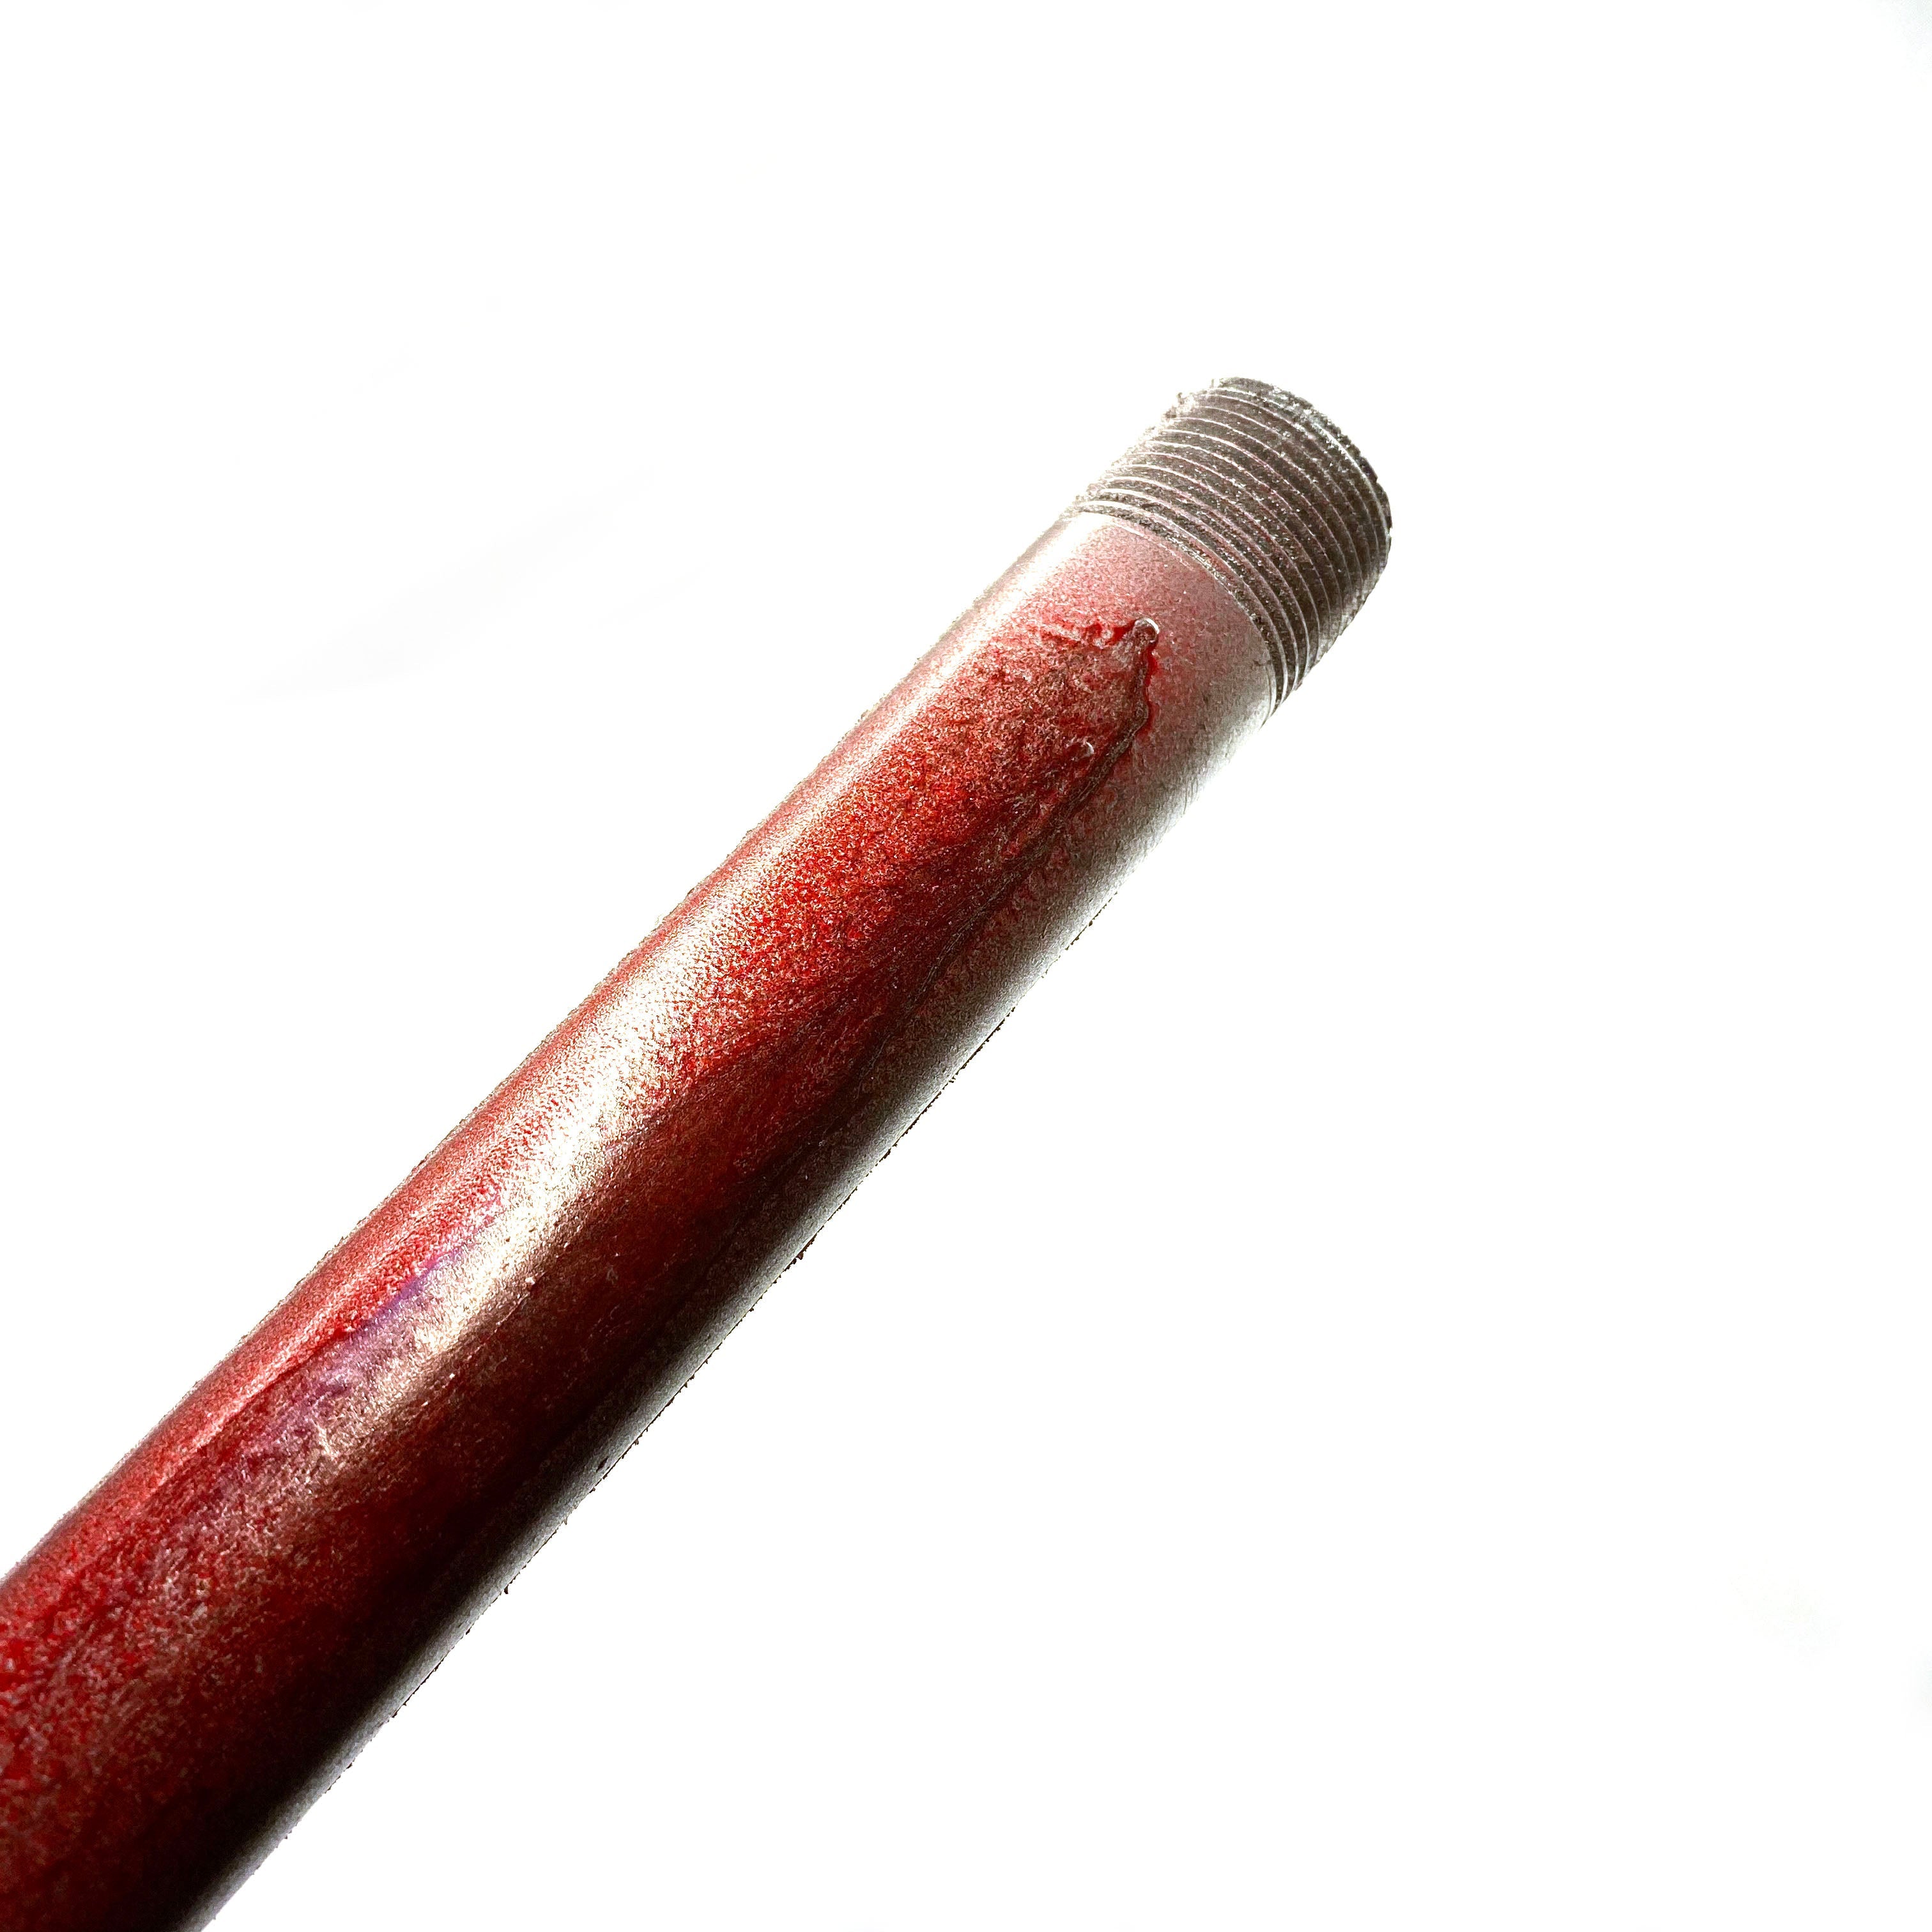 Foam Rubber Metal or Lead Pipe Replica Prop - BLOODY - Bloody